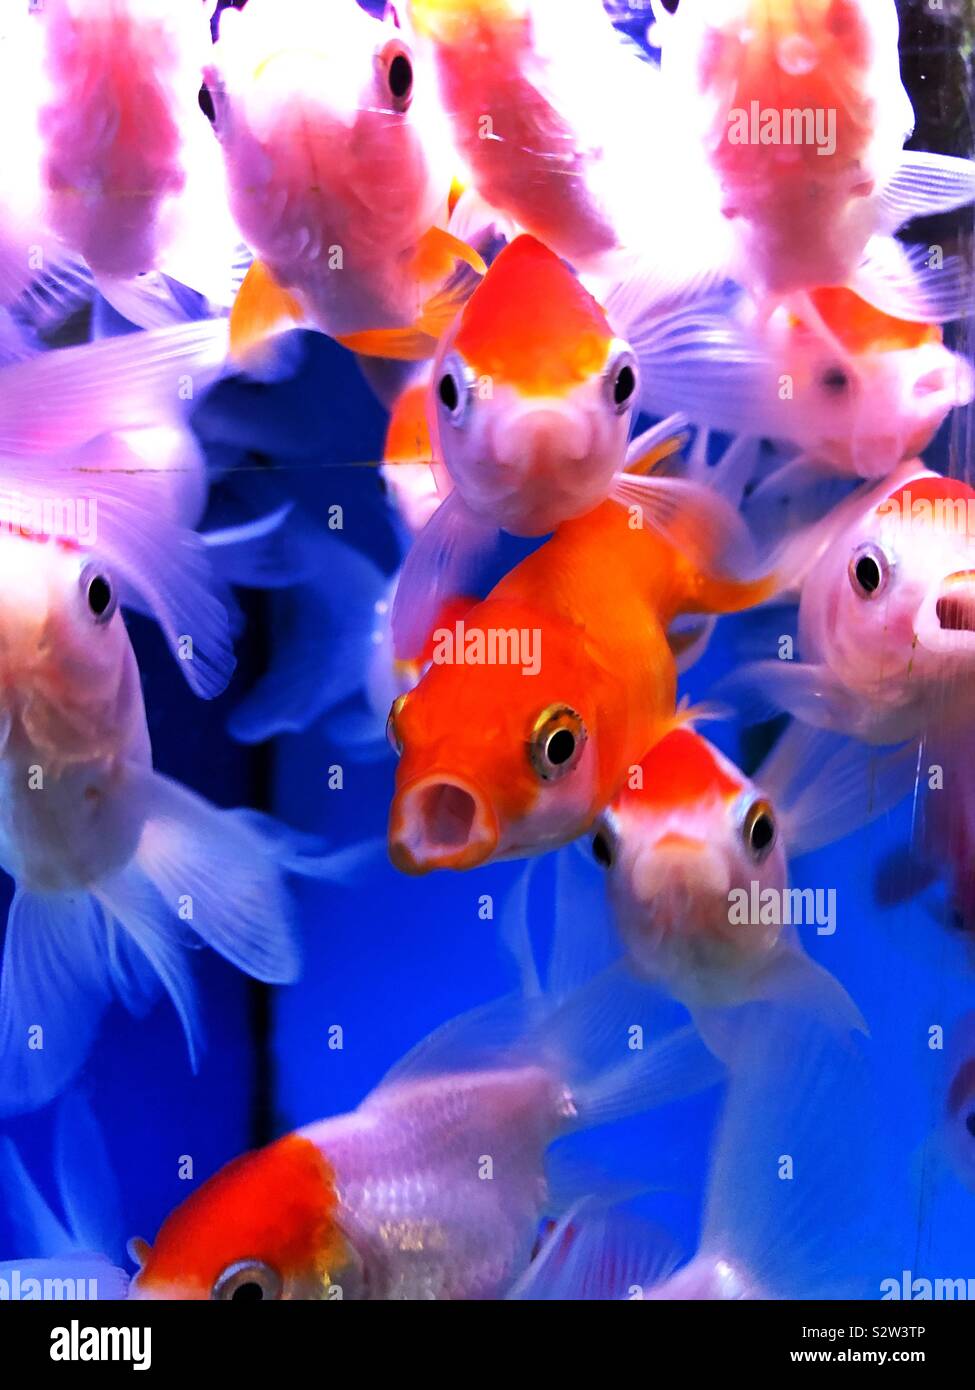 Pesce Rosso Fantasia Immagini e Fotos Stock - Alamy